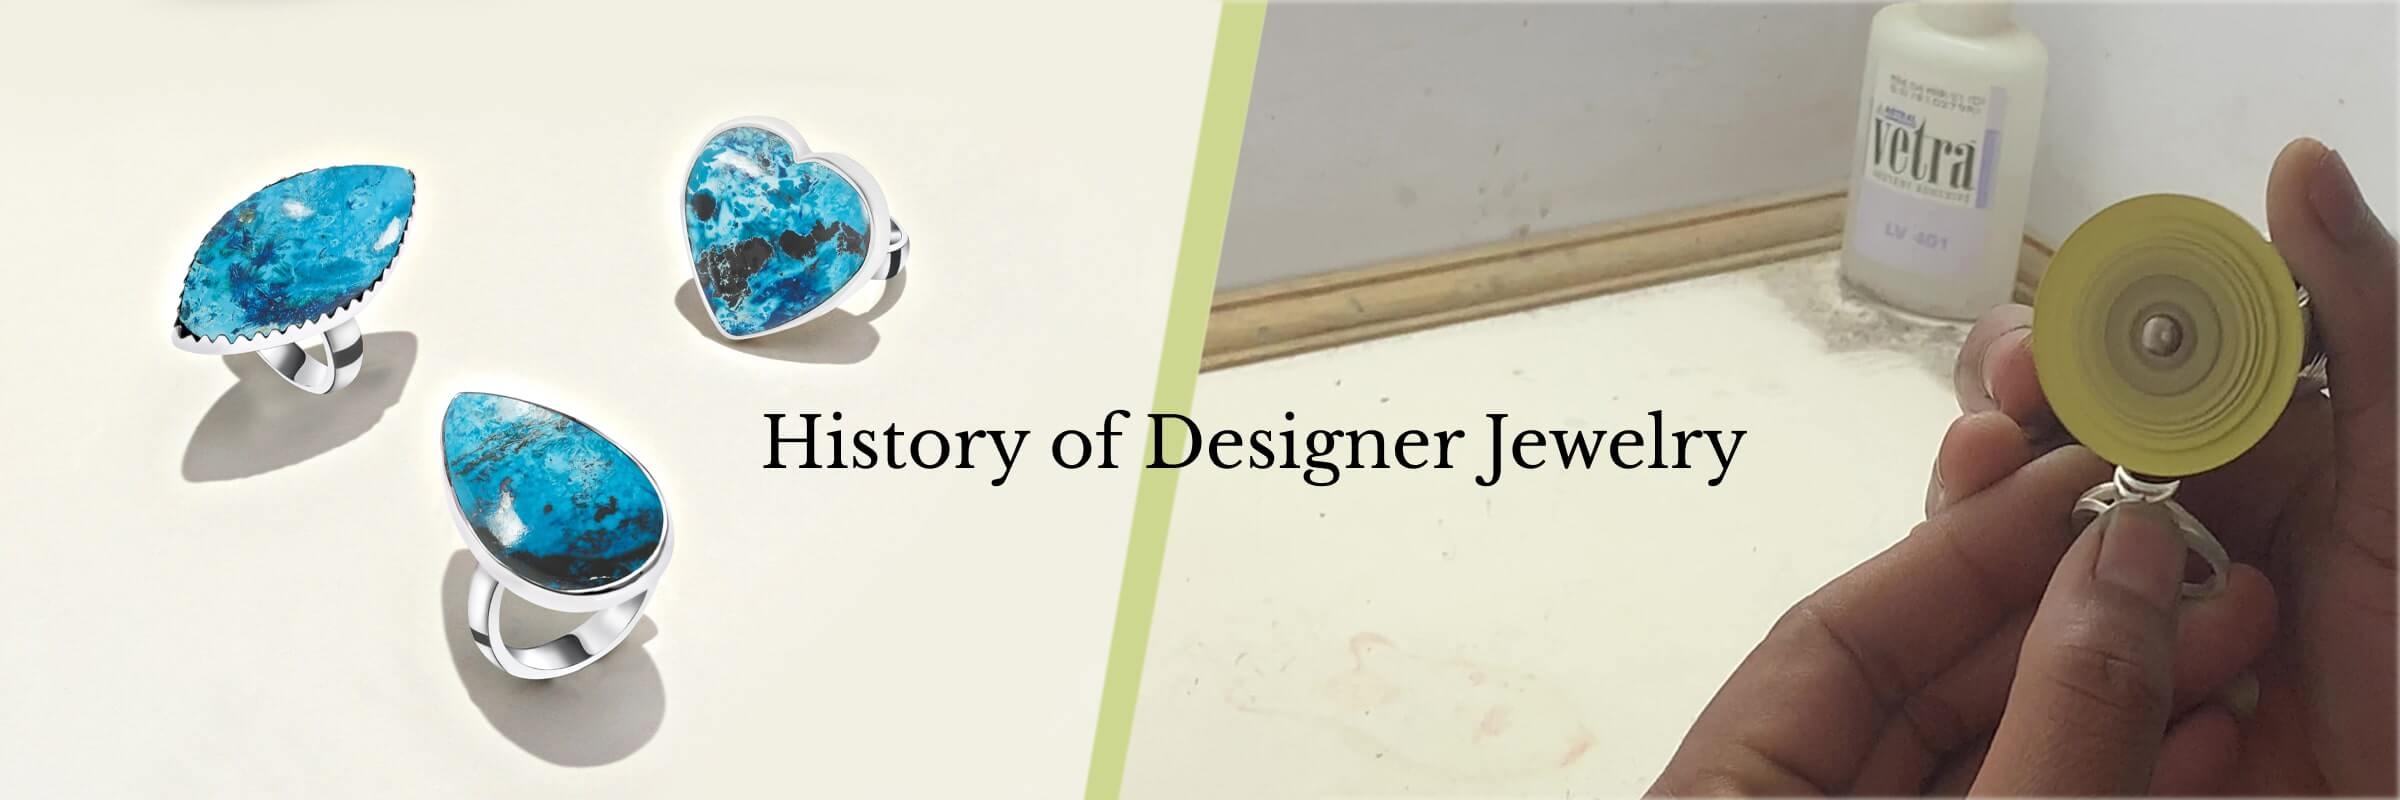 The Legacy of Designer Jewelry